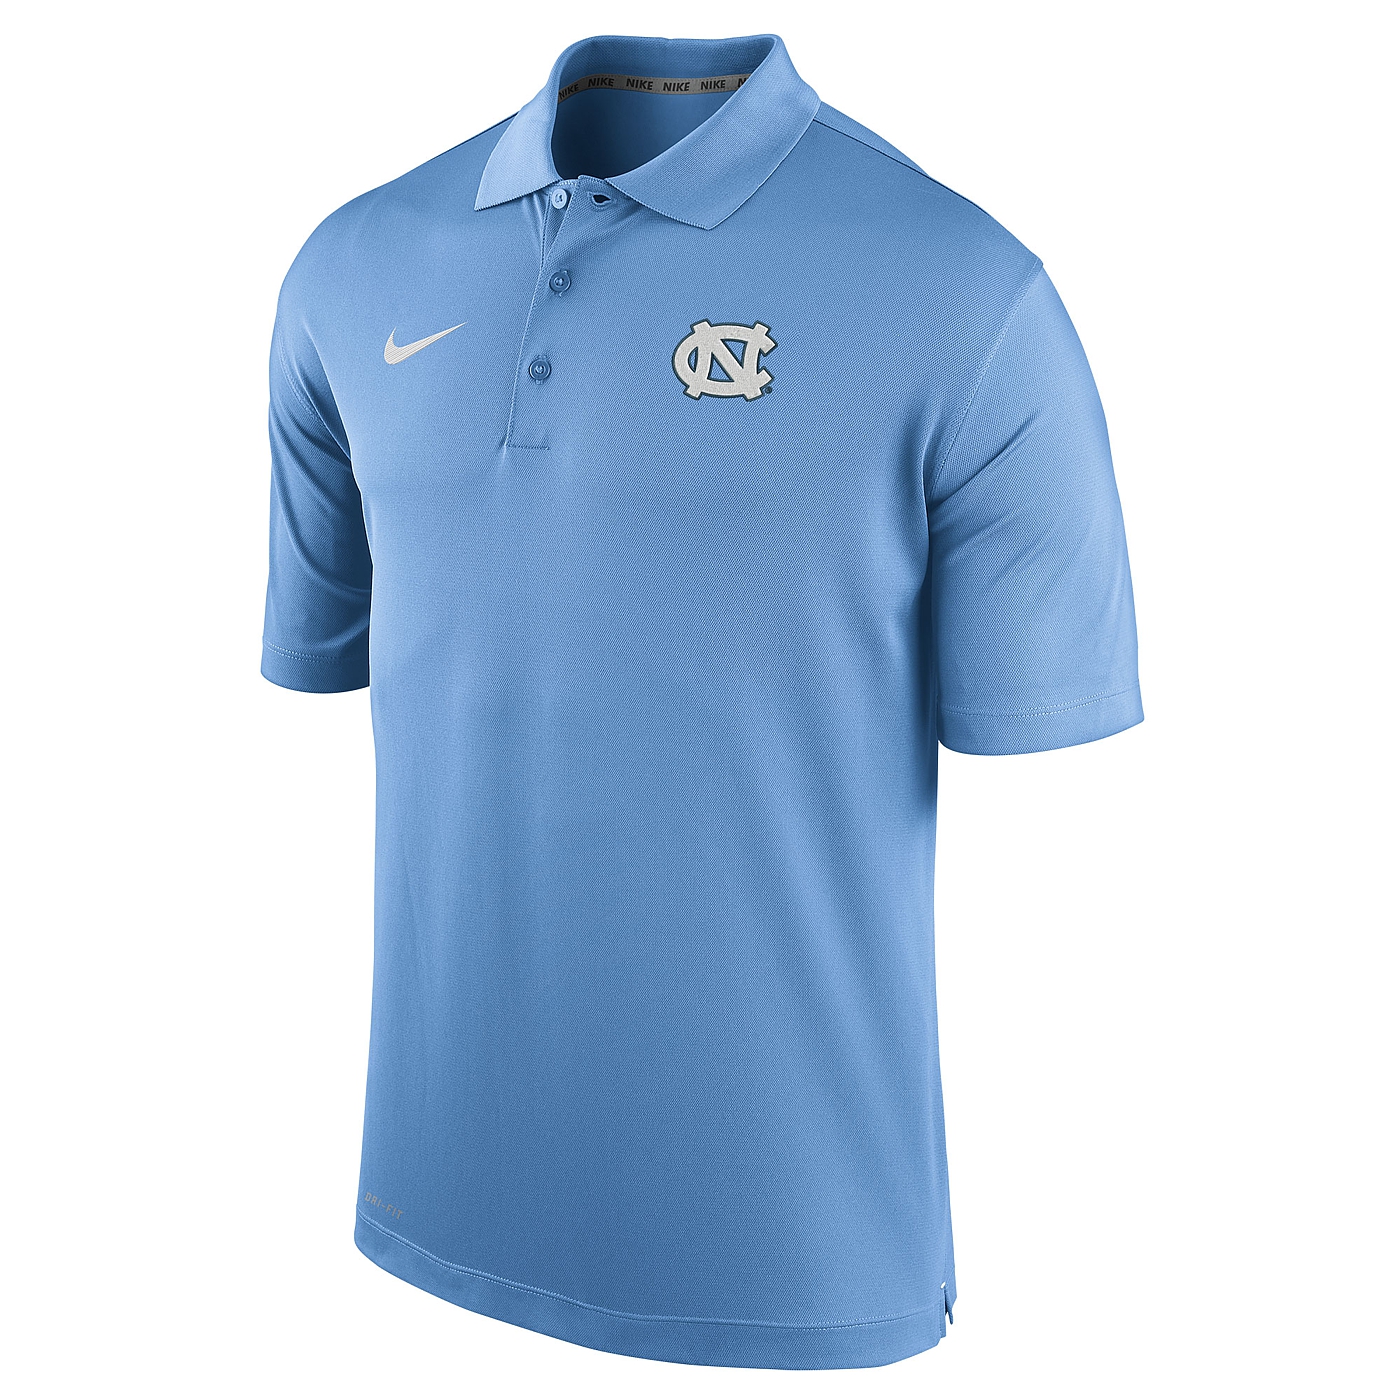 Johnny T-shirt - North Carolina Tar Heels - Nike (CB) by